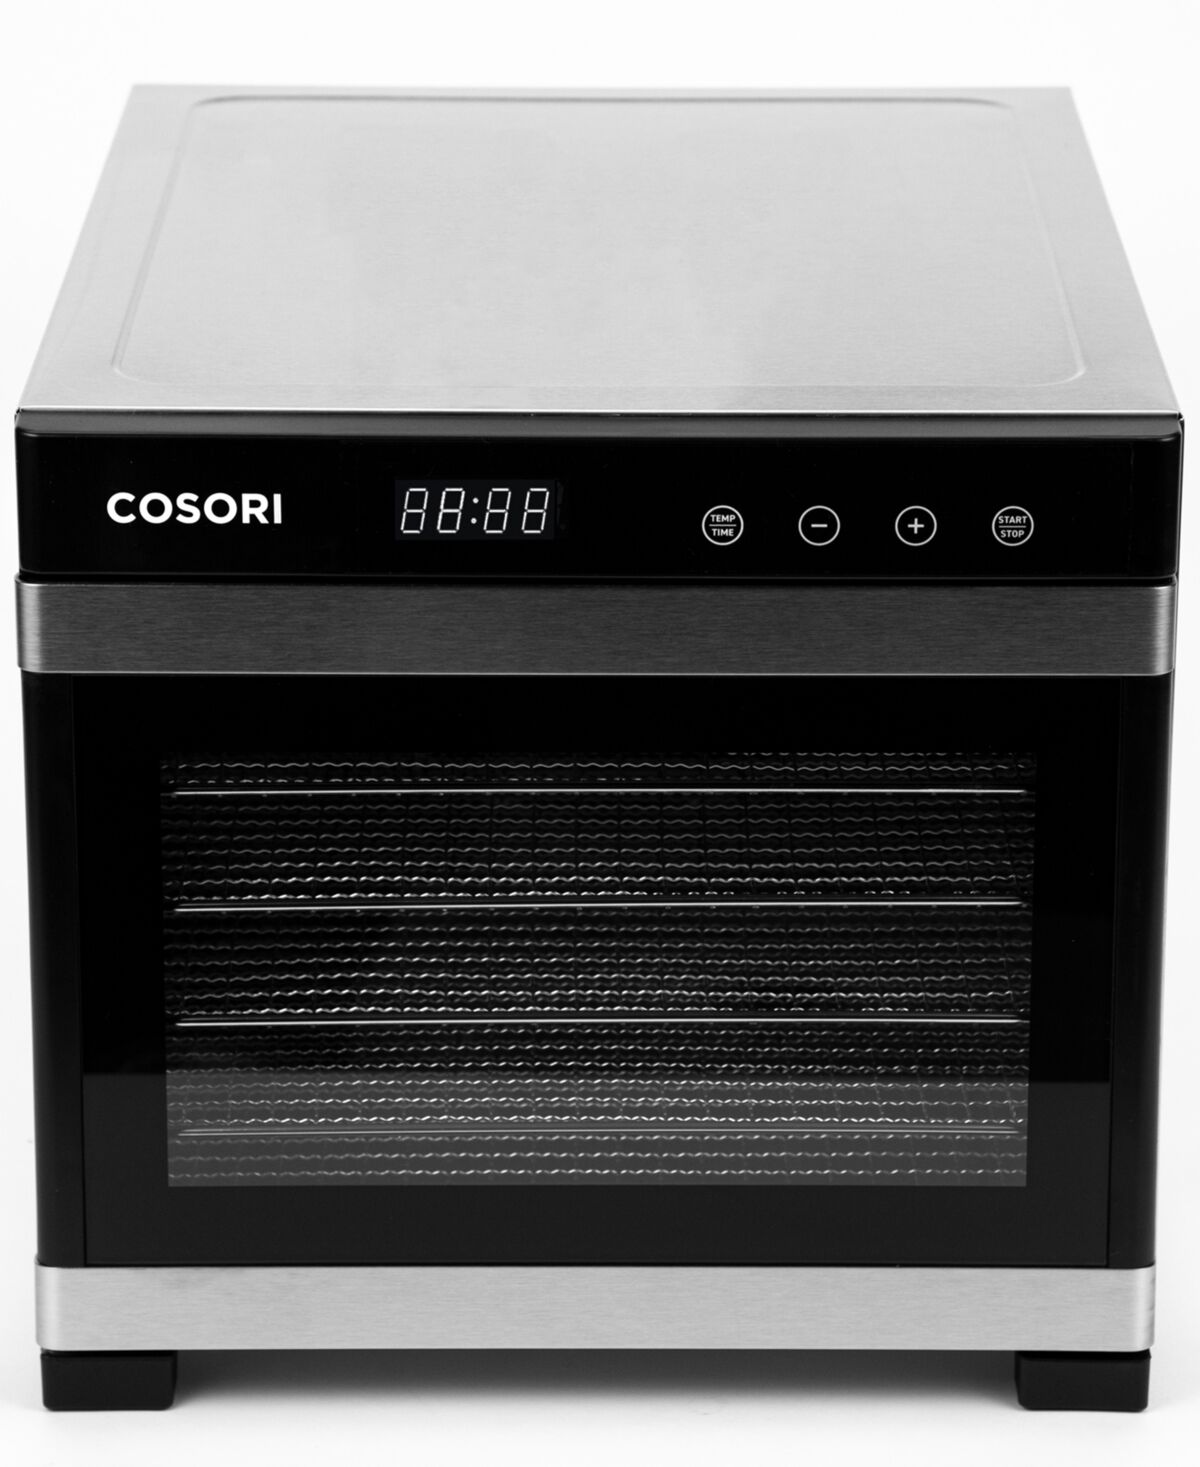 Cosori Premium Stainless Steel Food Dehydrator with Auto Shutoff - Silver / Black